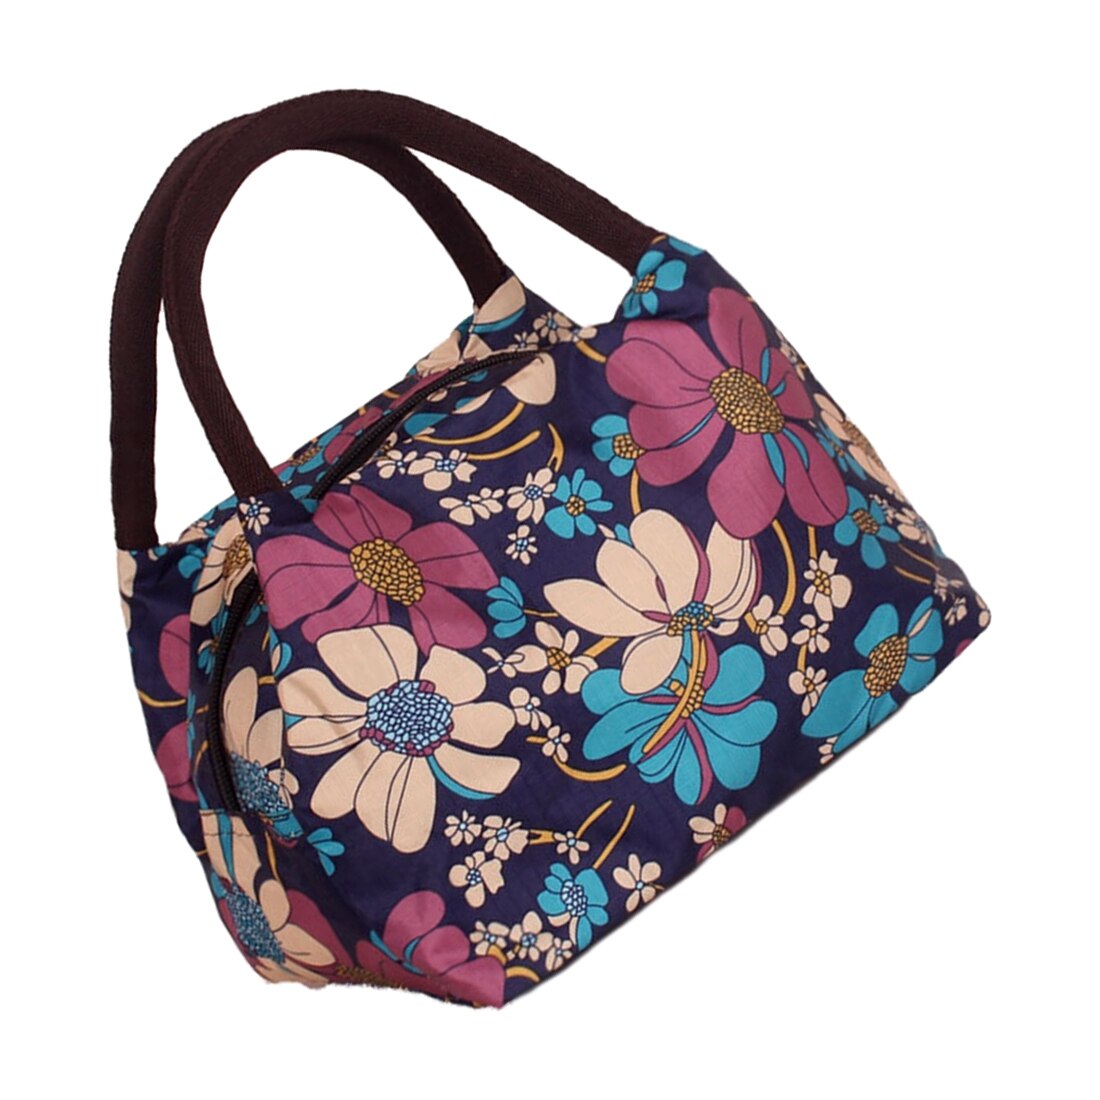 Lady's fashion oxford bag women Handbags lunch shoulder bags for female Messenger Bags - ebowsos